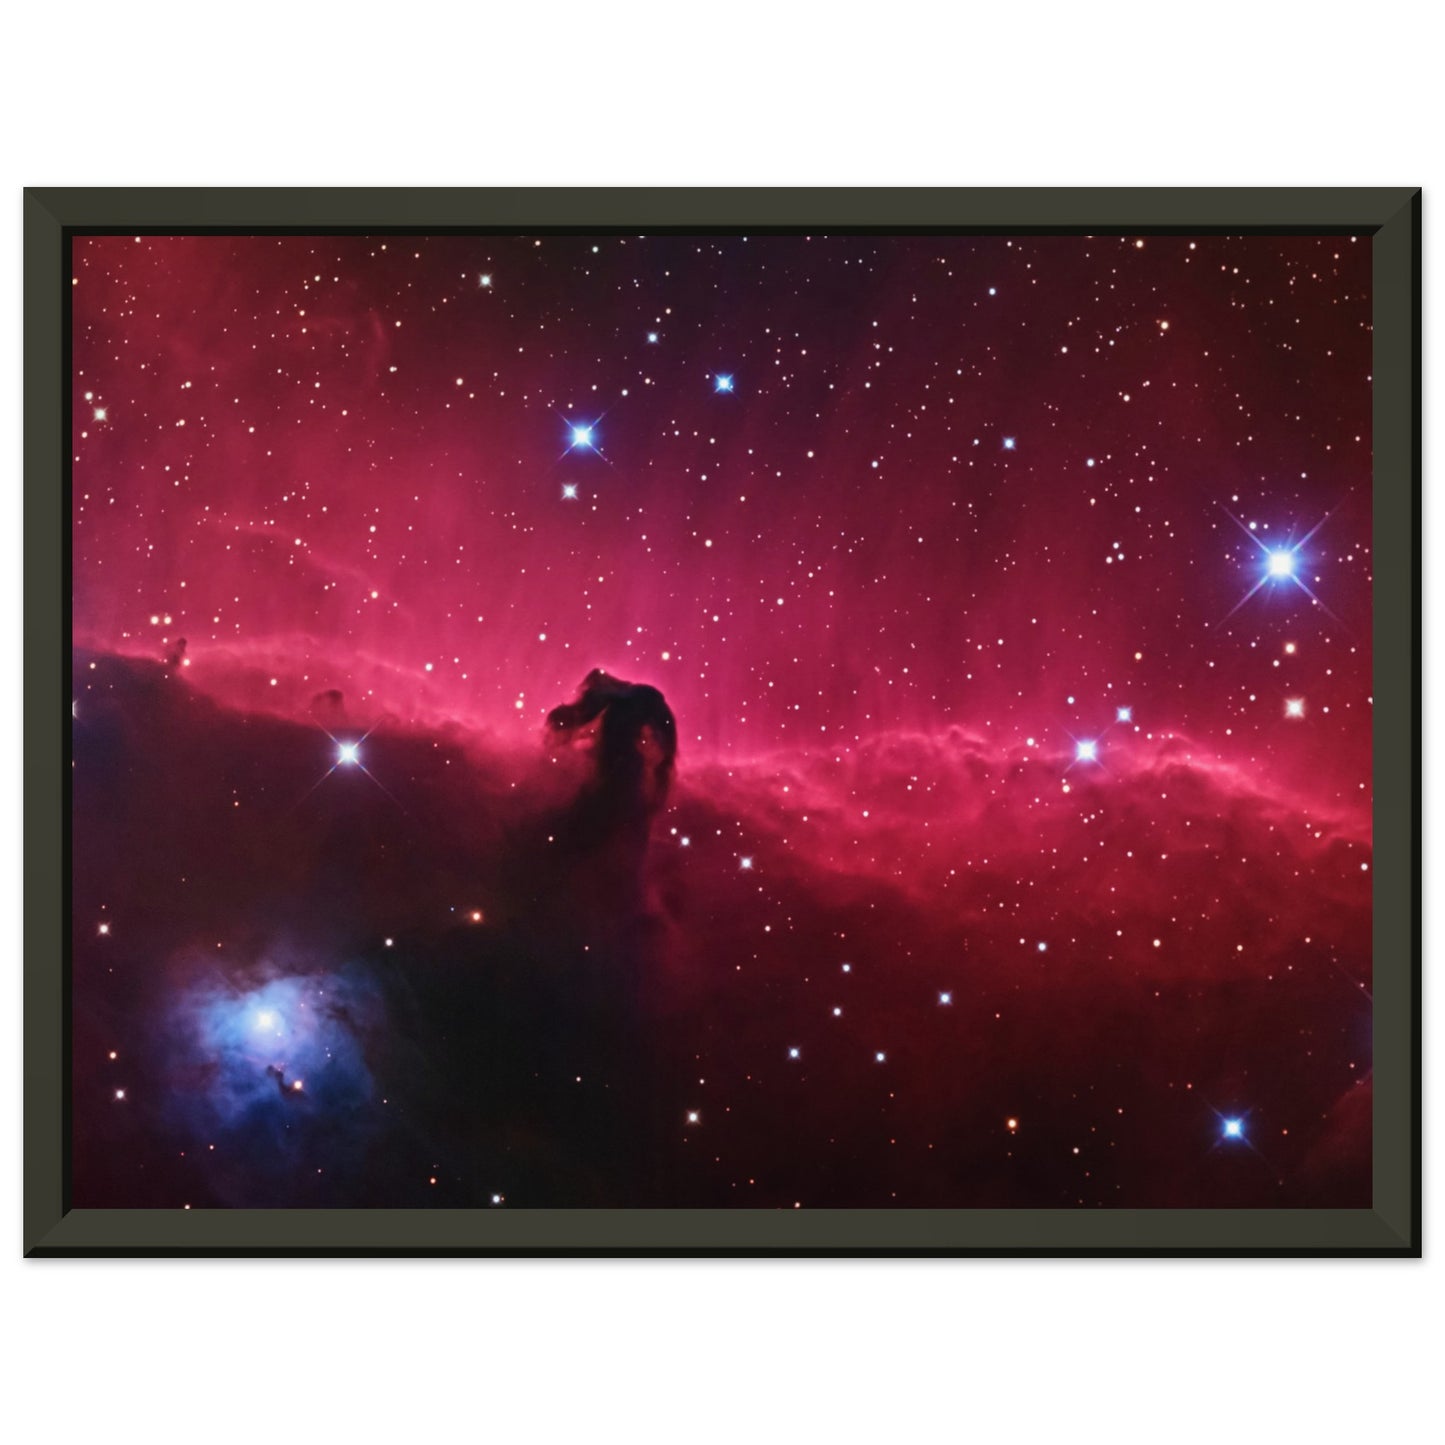 Horsehead Nebula